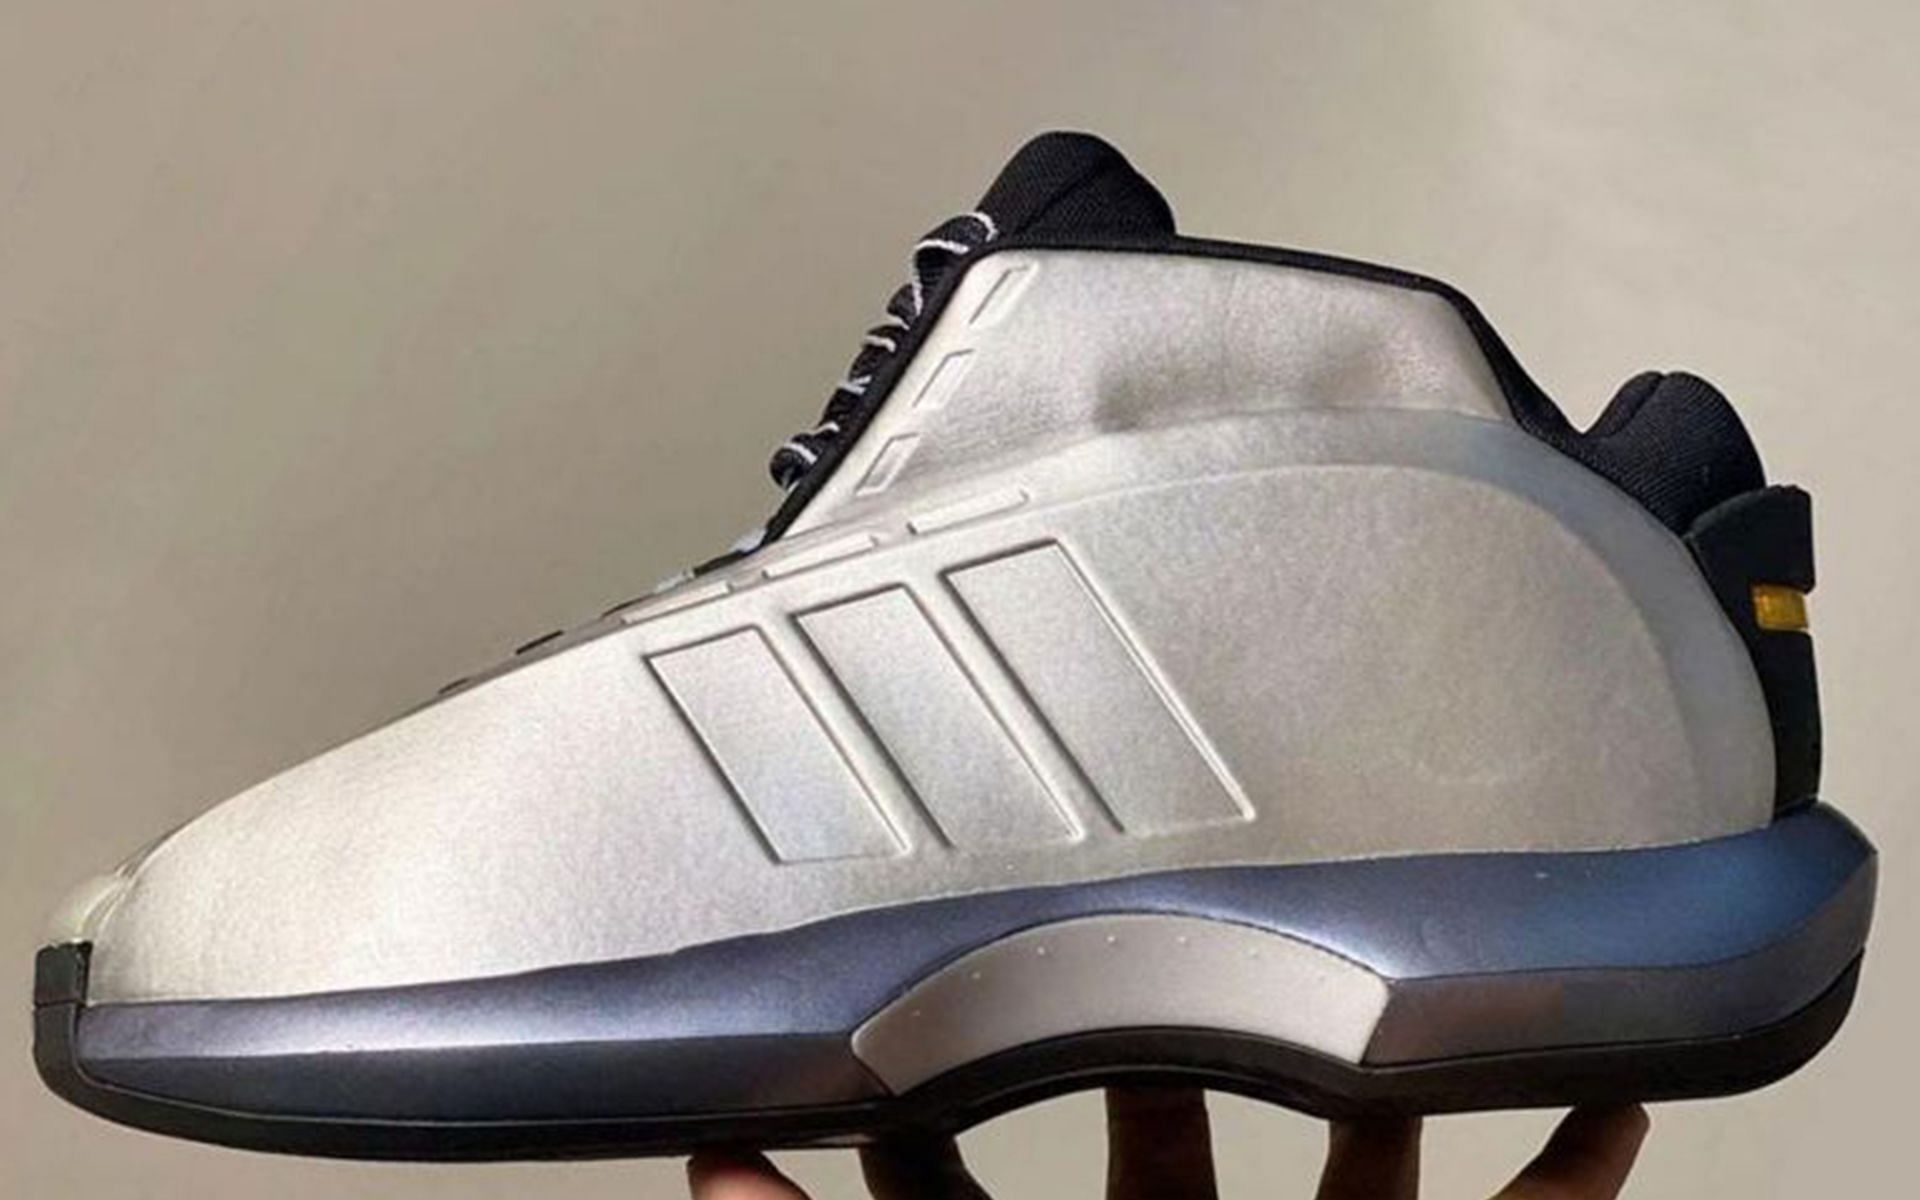 Adidas Crazy 1 OG Metallic Silver shoes (Image via Instagram/@Solebyjc)